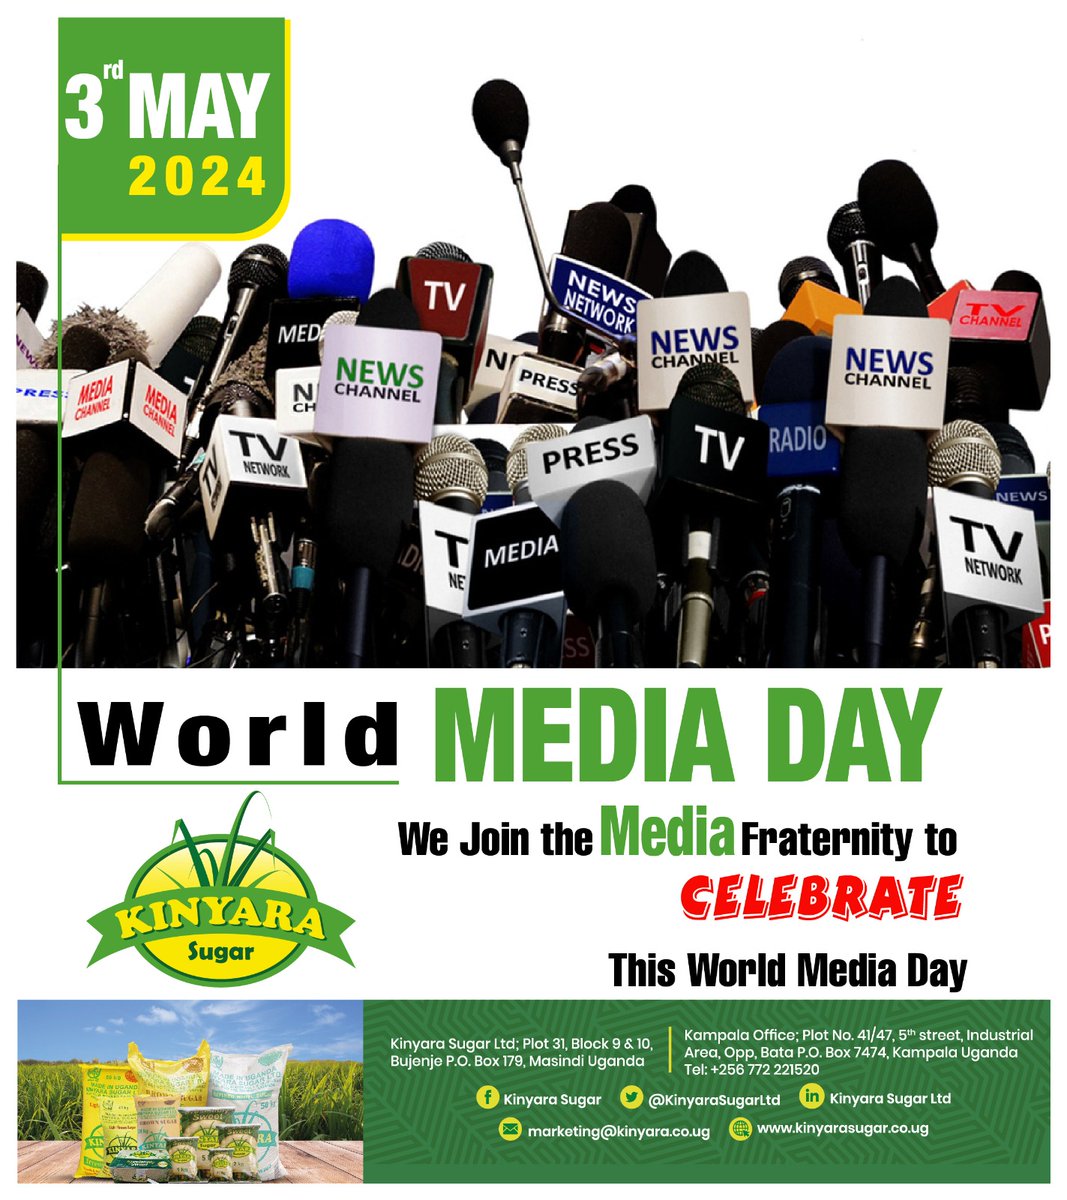 We commemorate this World Media Day 2024 together and together we can make a positive change. #WeAreKinyaraSugar #IrresistiblySweet #WorldPressFreedomDay #WorldPressDay2024